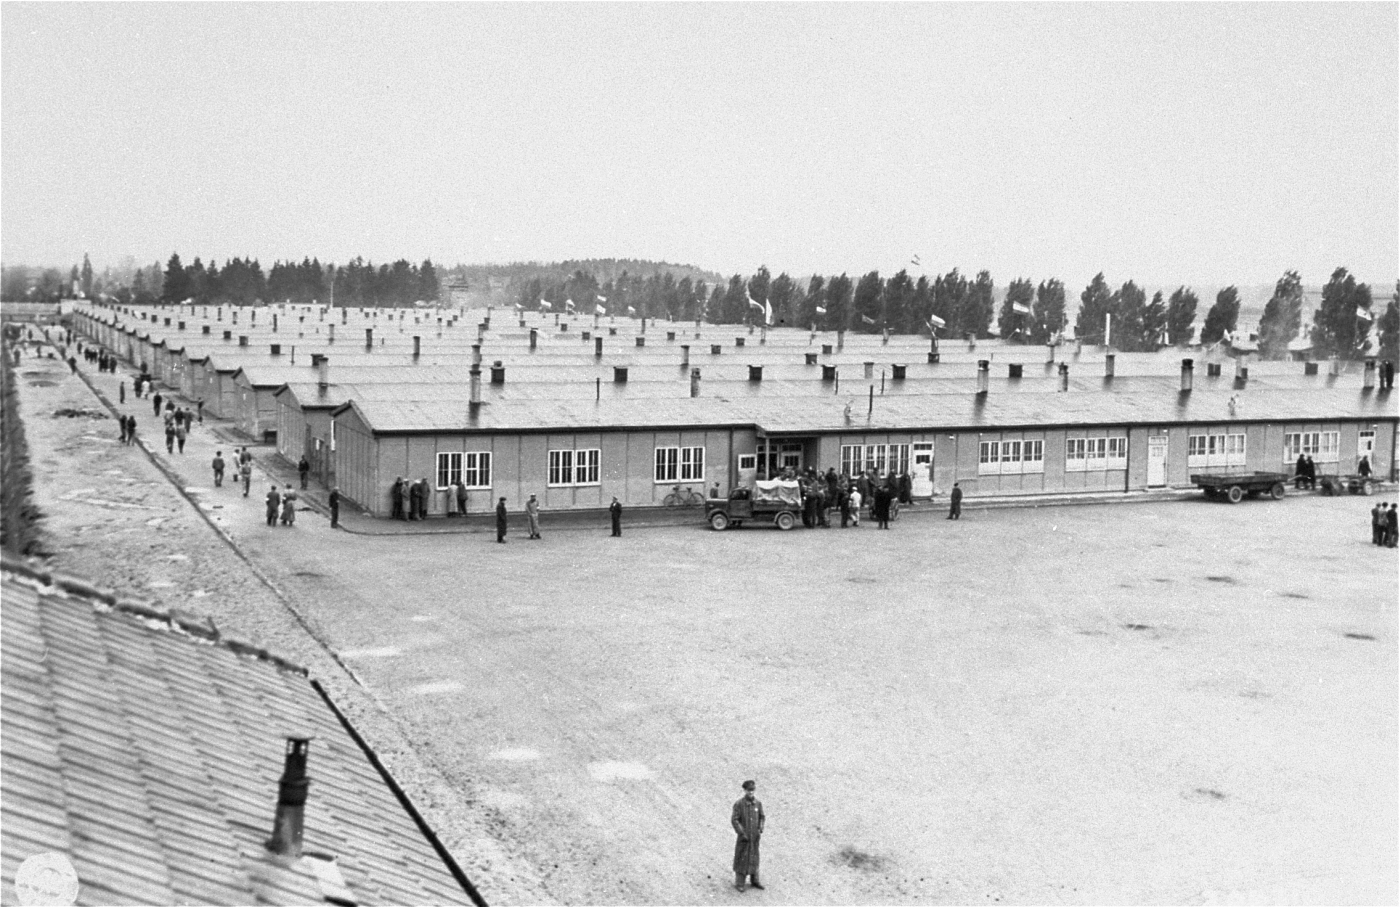 Prisoner's_barracks_dachau.jpg